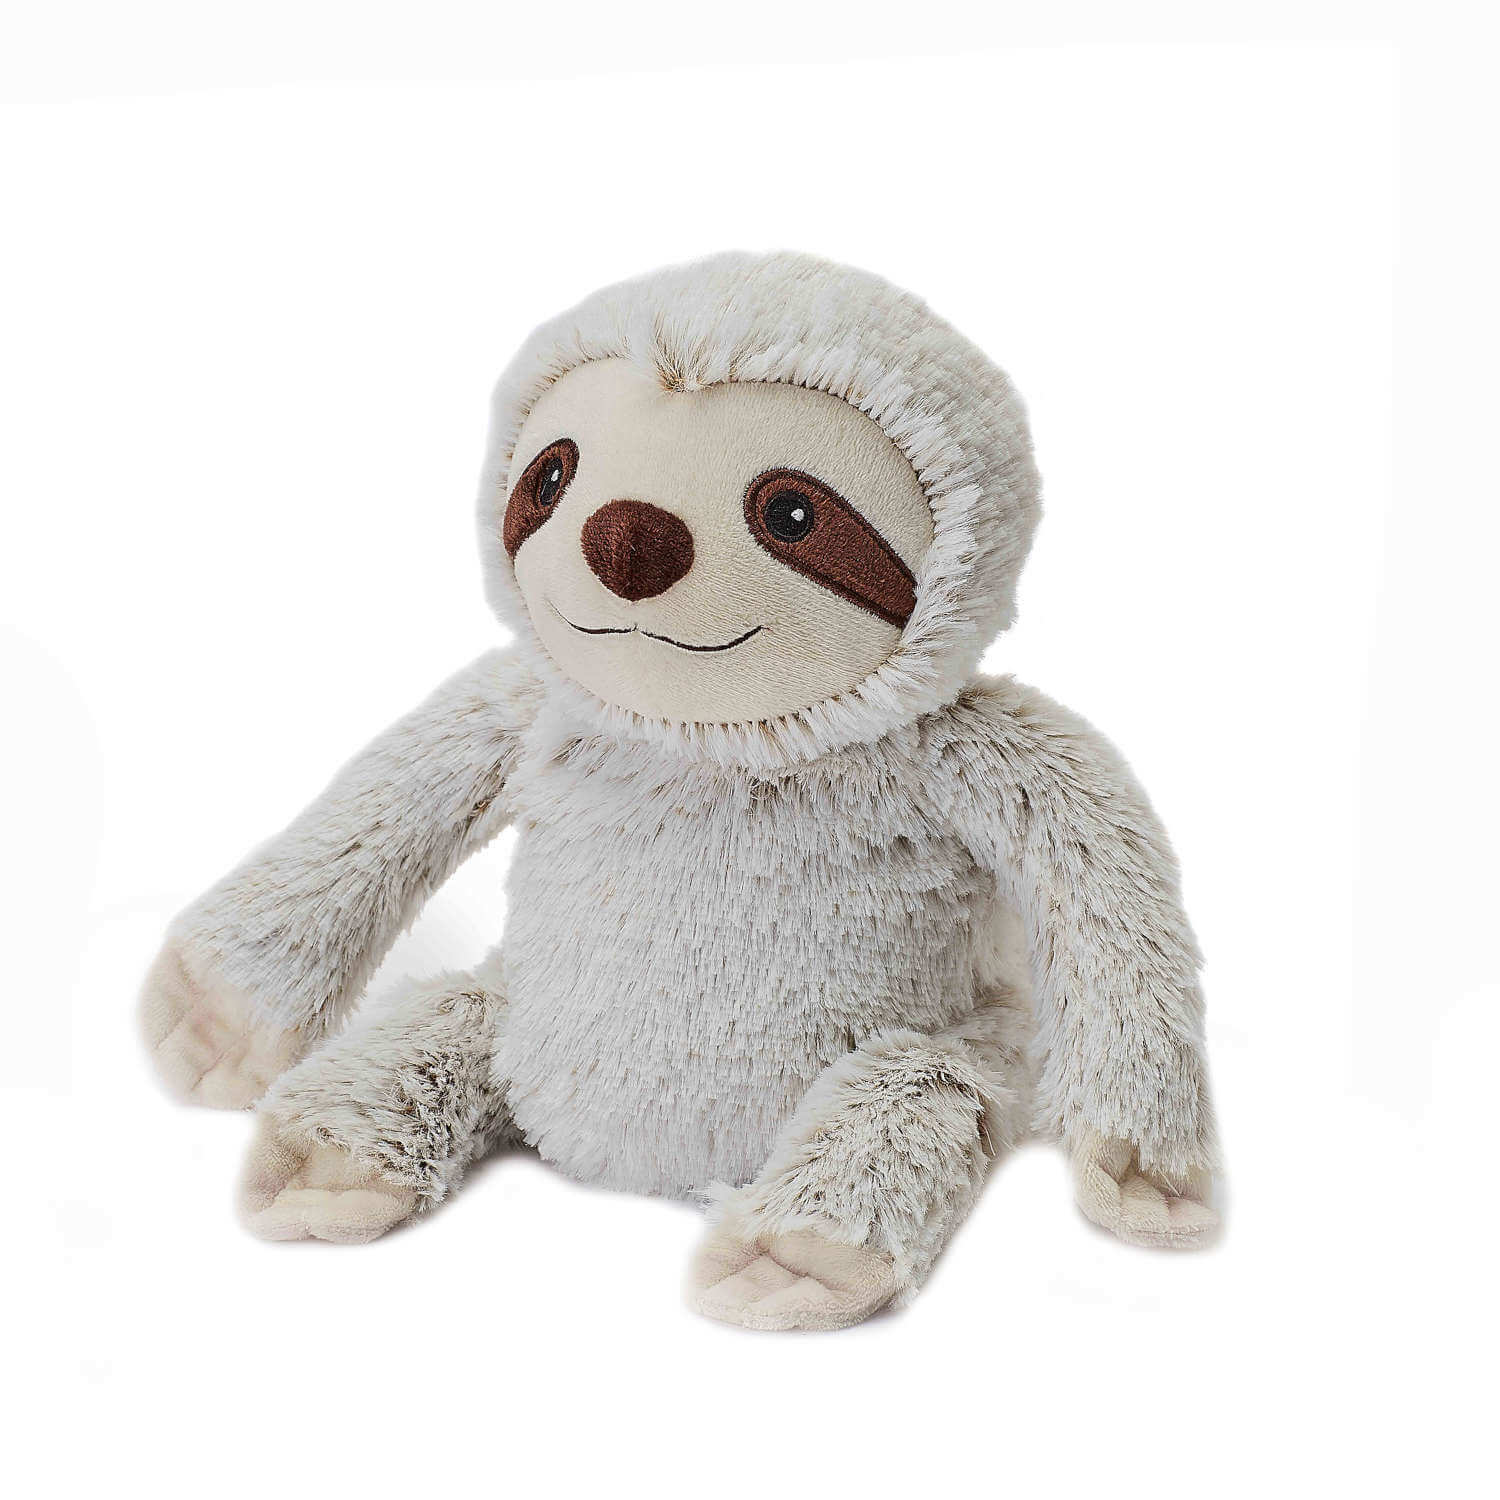 Warmies Plush Marshmallow Sloth Microwavable 1 Shaws Department Stores